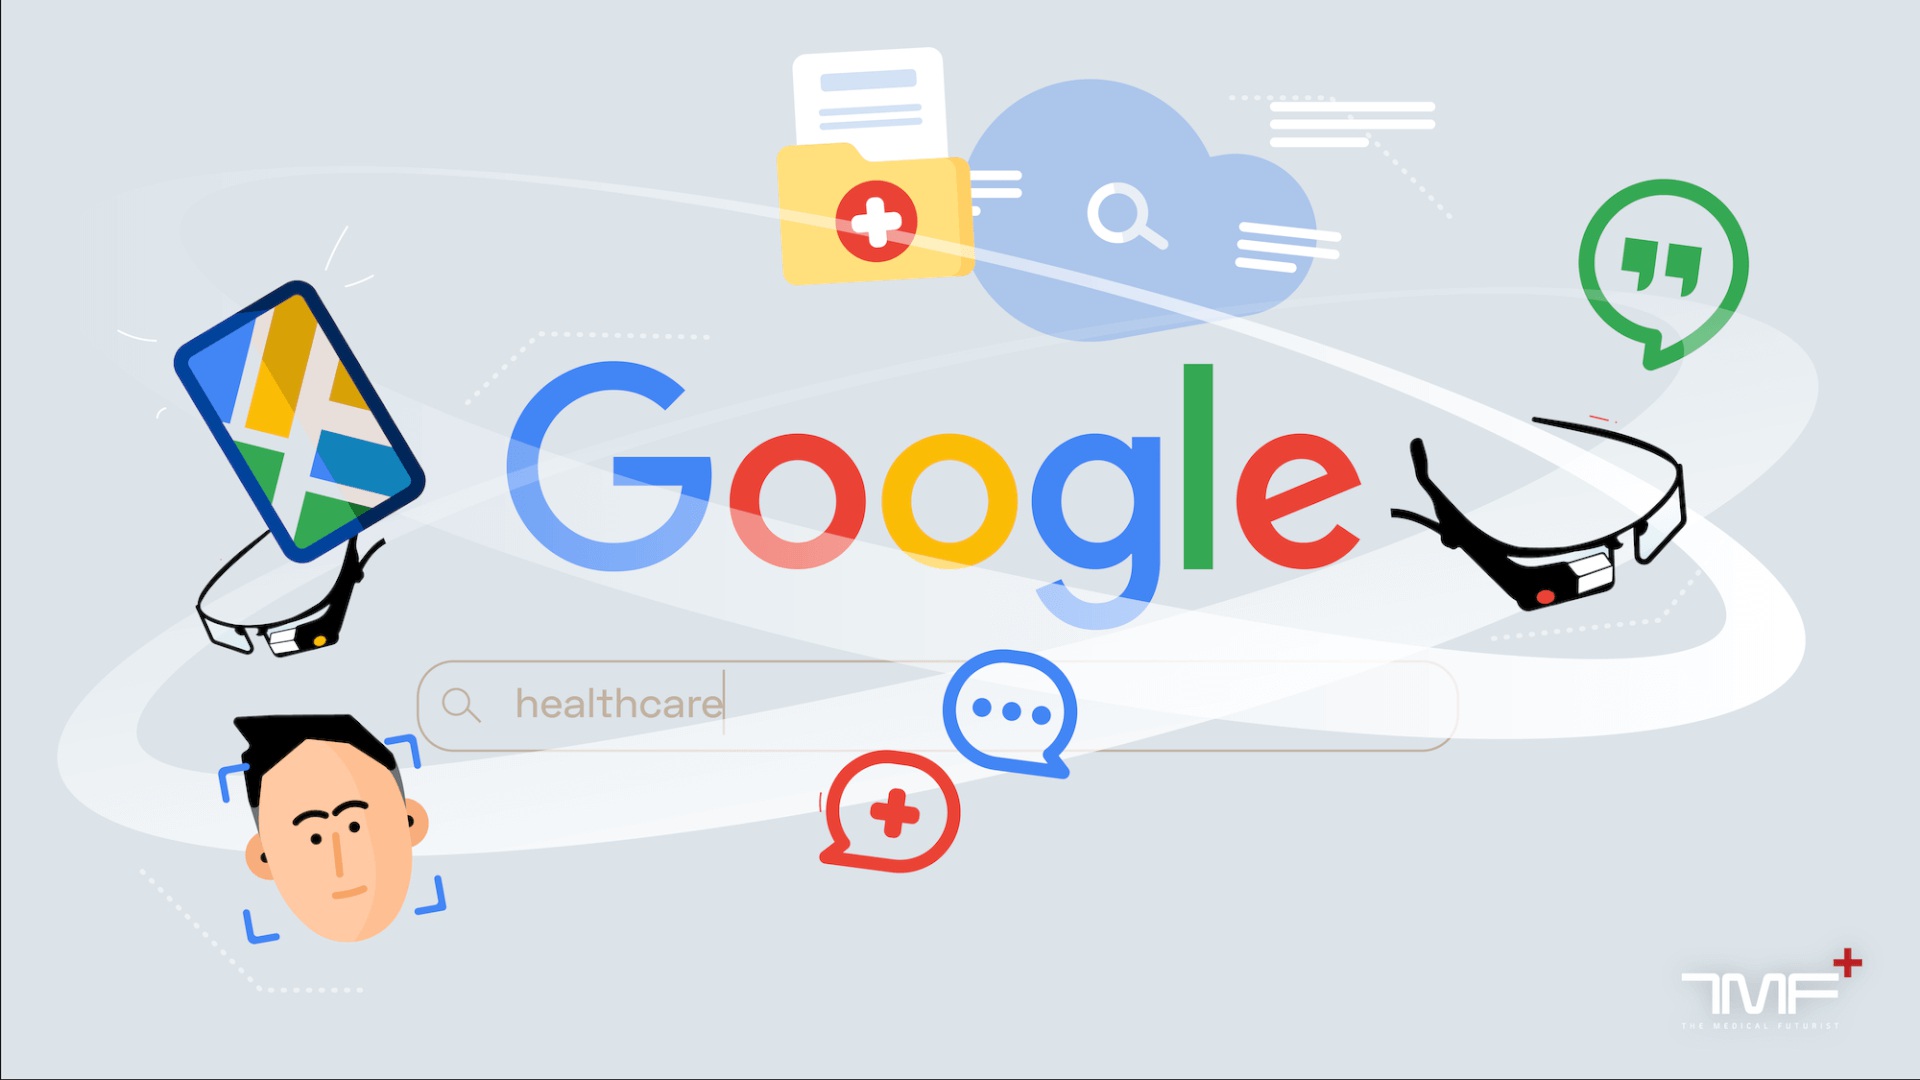 Google's Masterplan for Healthcare